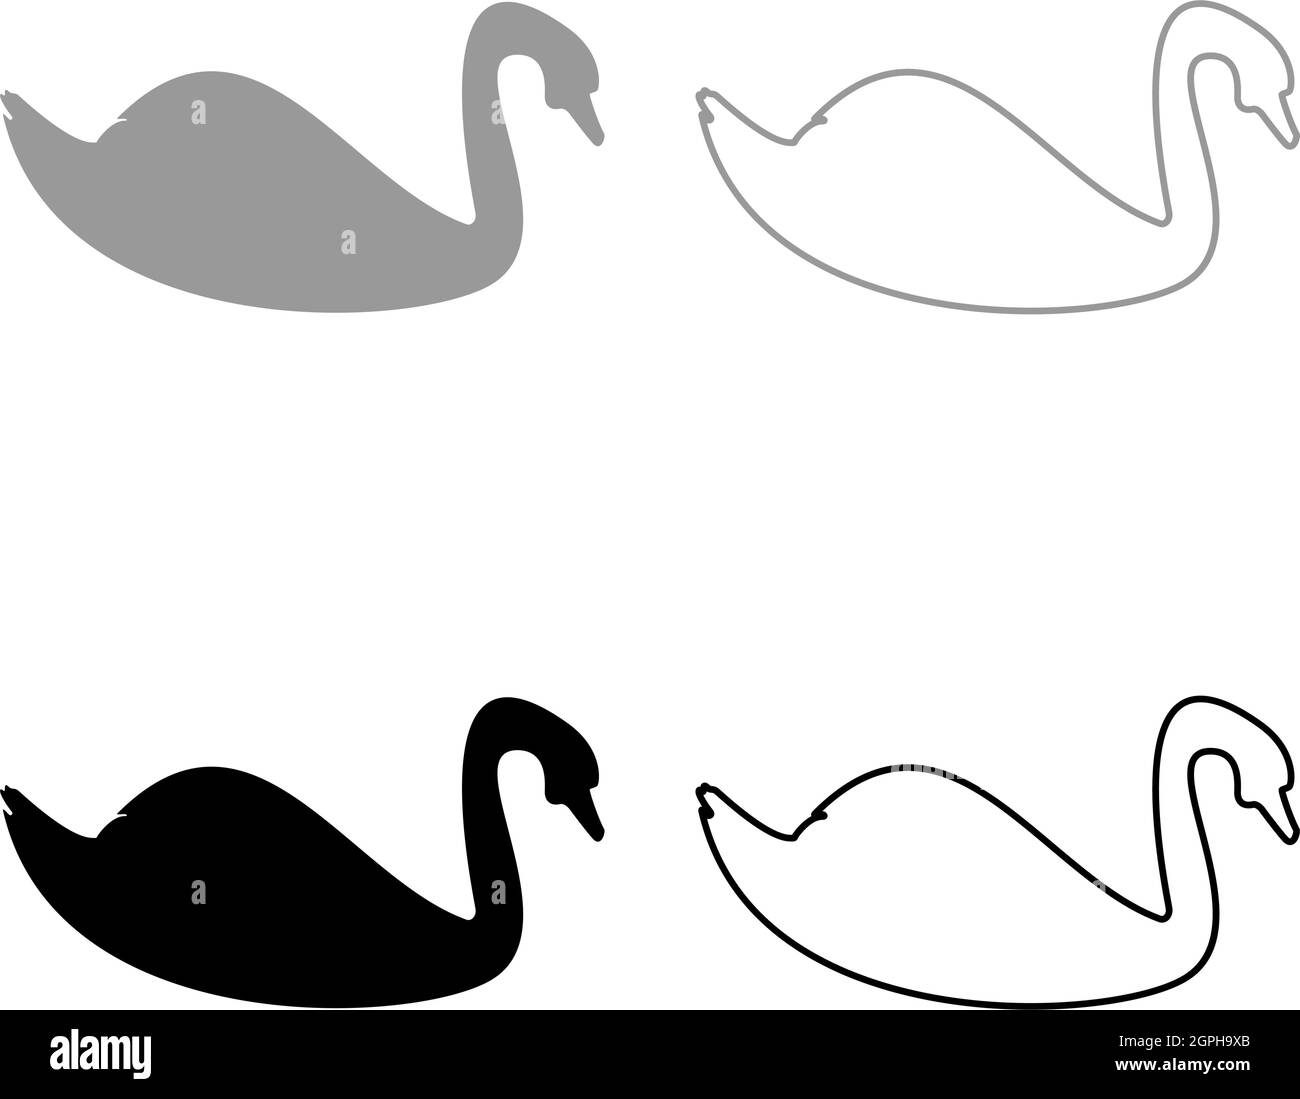 Swan Vogel Wasservögel Silhouette grau schwarz Farbe Vektor Illustration solide Umriss Stil Bild Stock Vektor